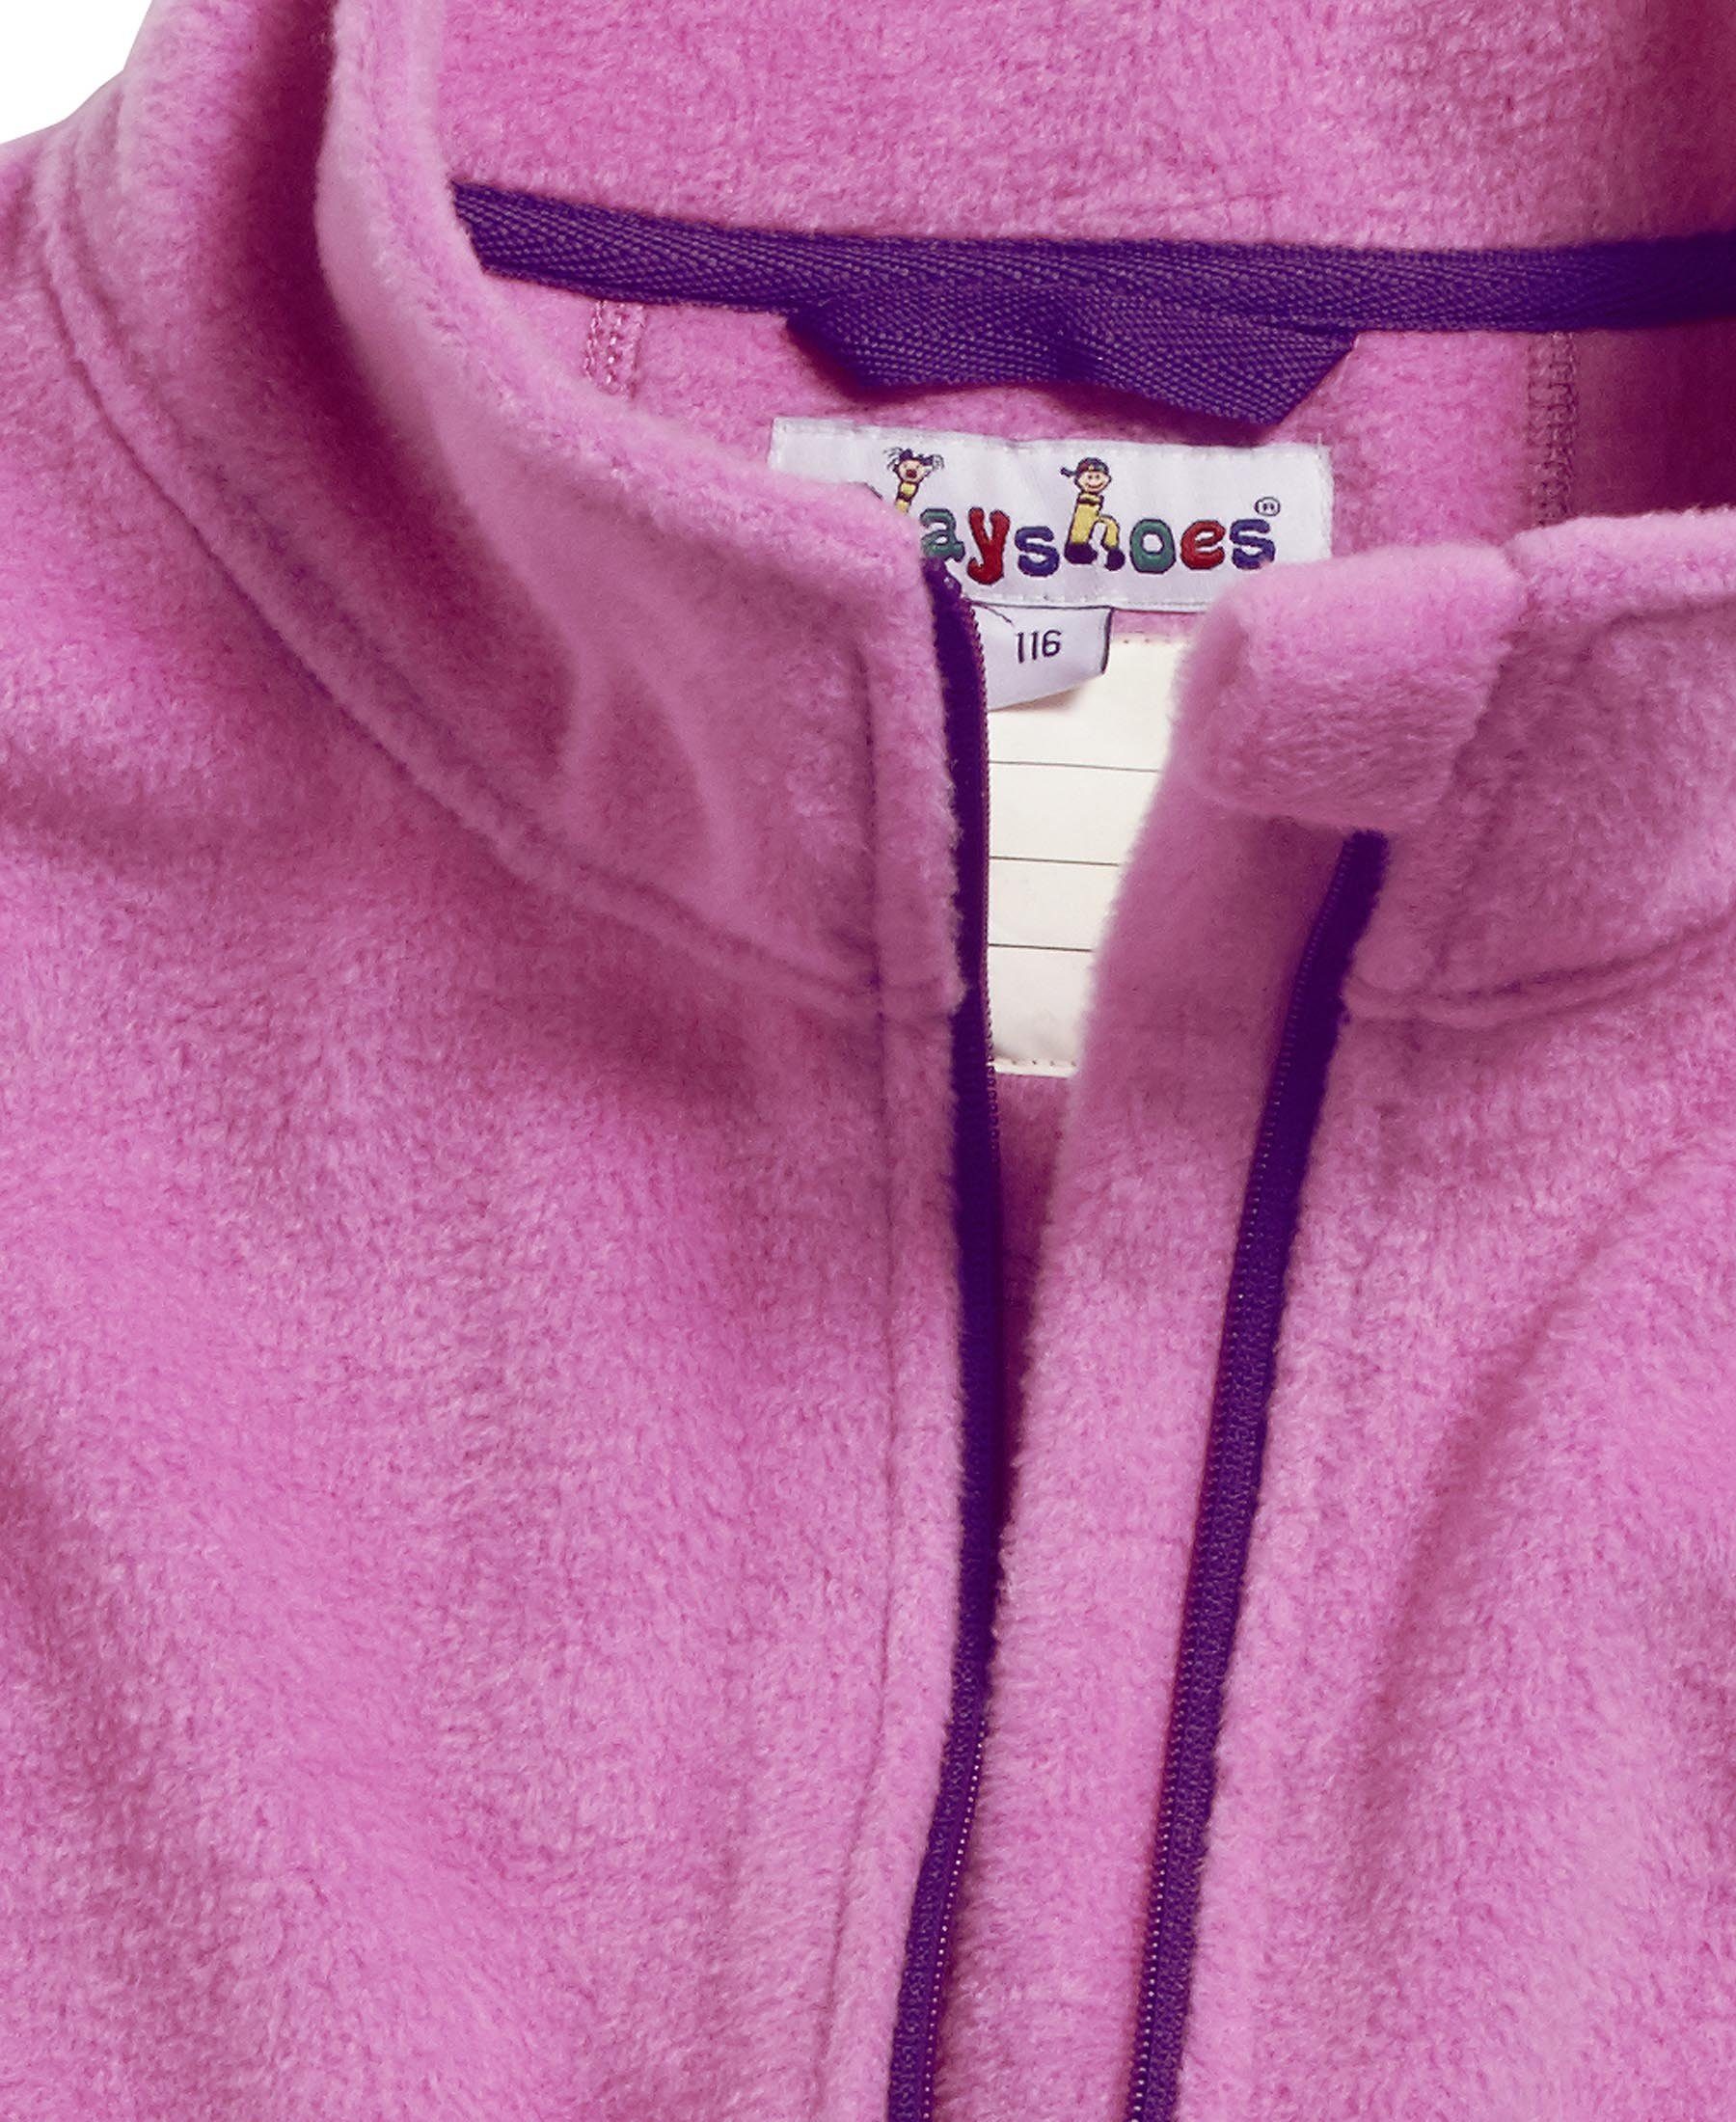 Playshoes Strickfleecejacke Fleece-Weste farbig abgesetzt pink